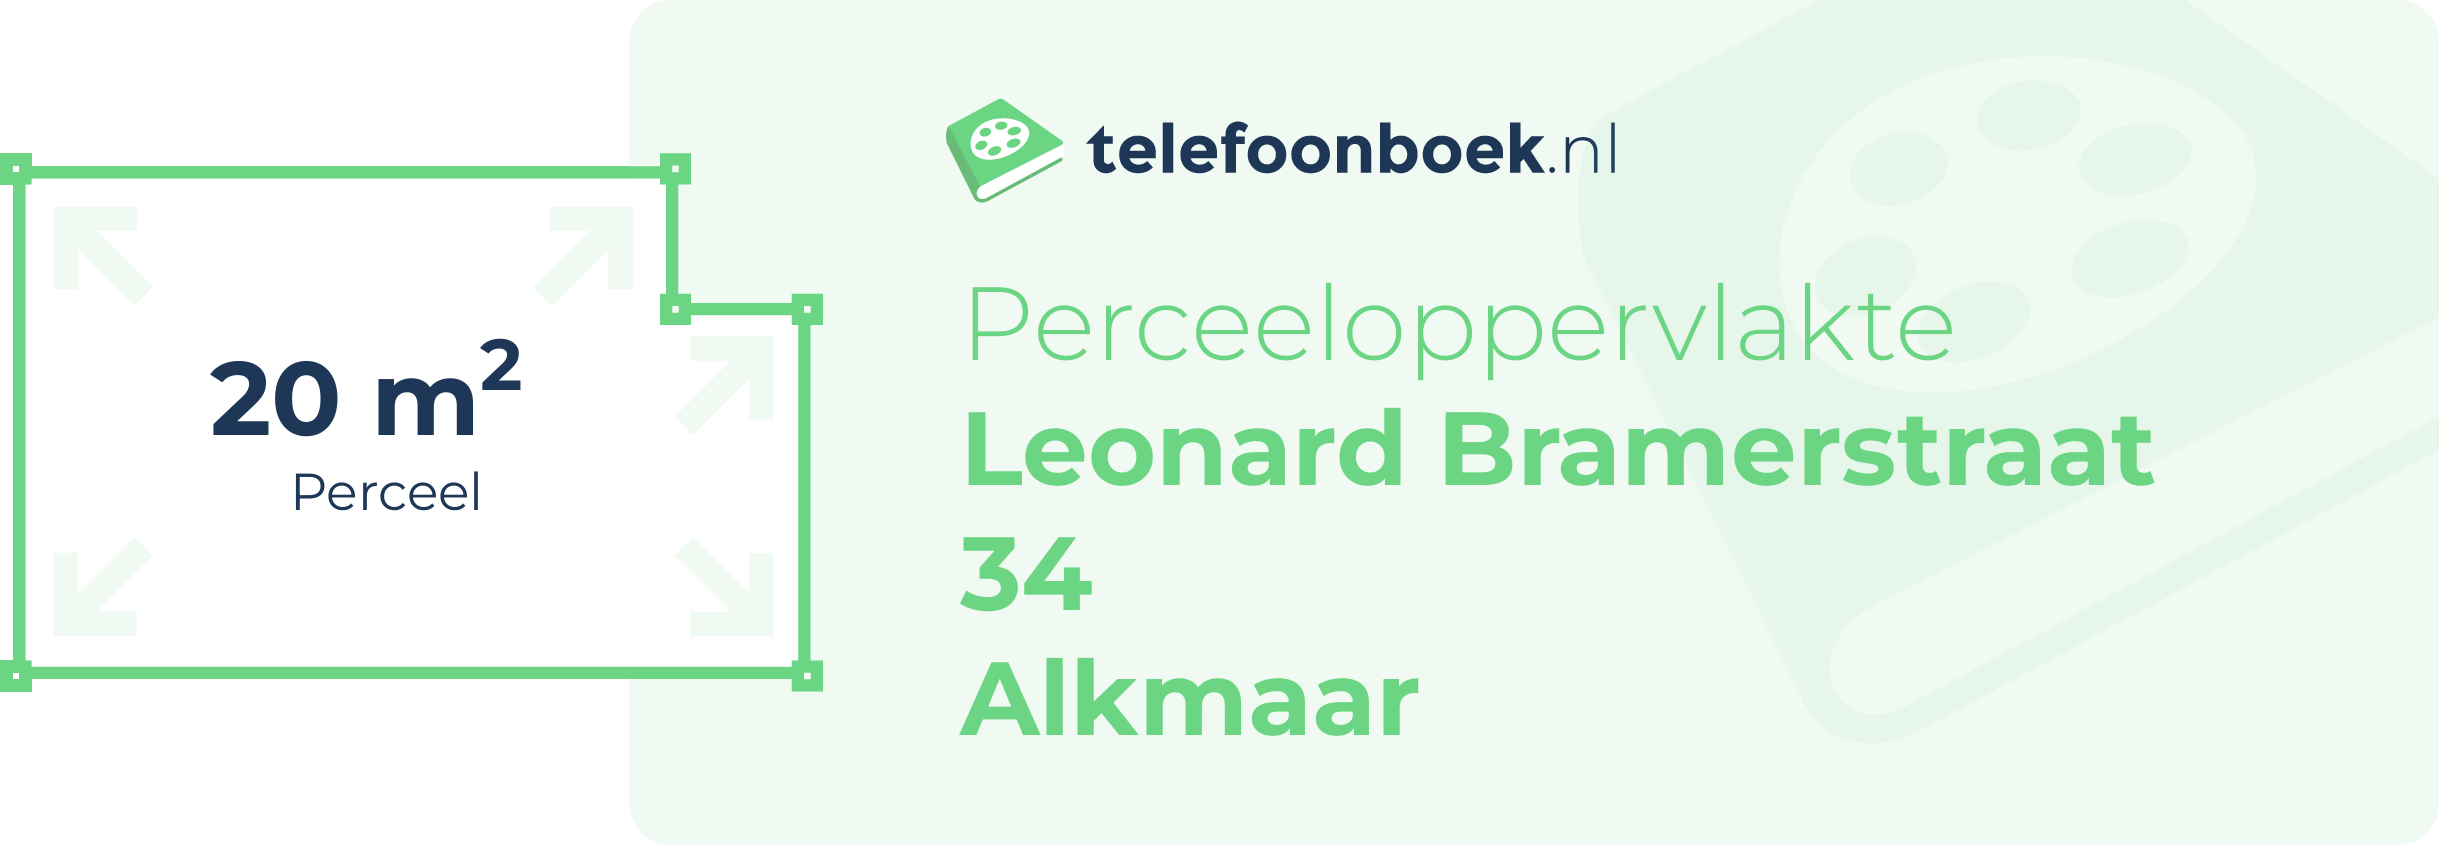 Perceeloppervlakte Leonard Bramerstraat 34 Alkmaar